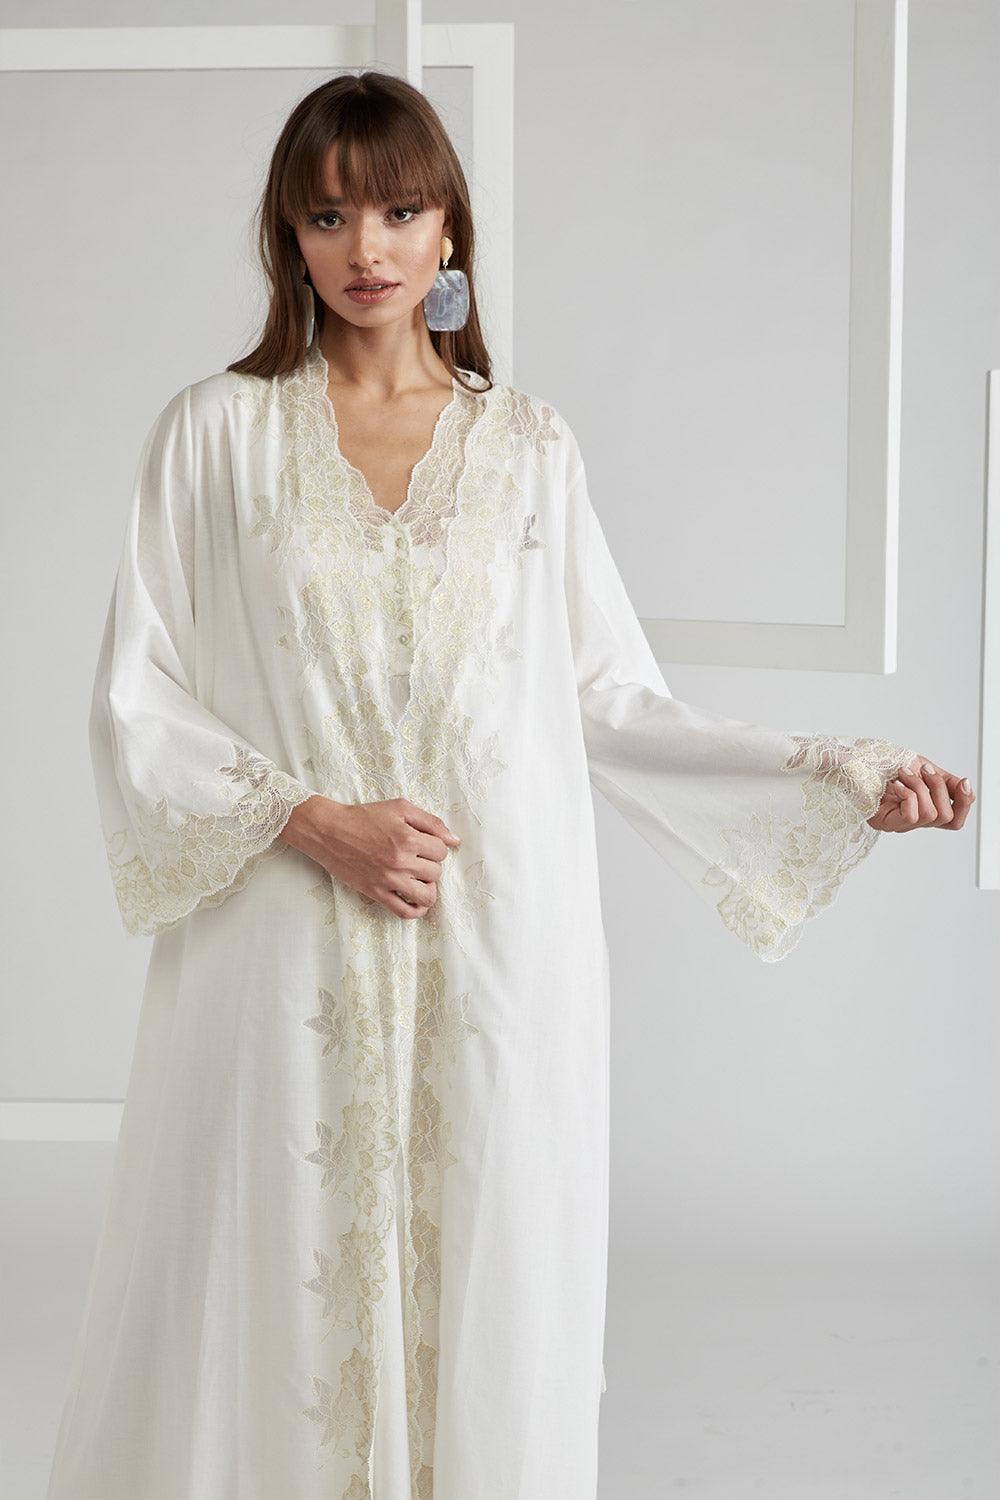 Trimmed Cotton Vual Robe Set - Big Rose ( Gold) Off White - Bocan